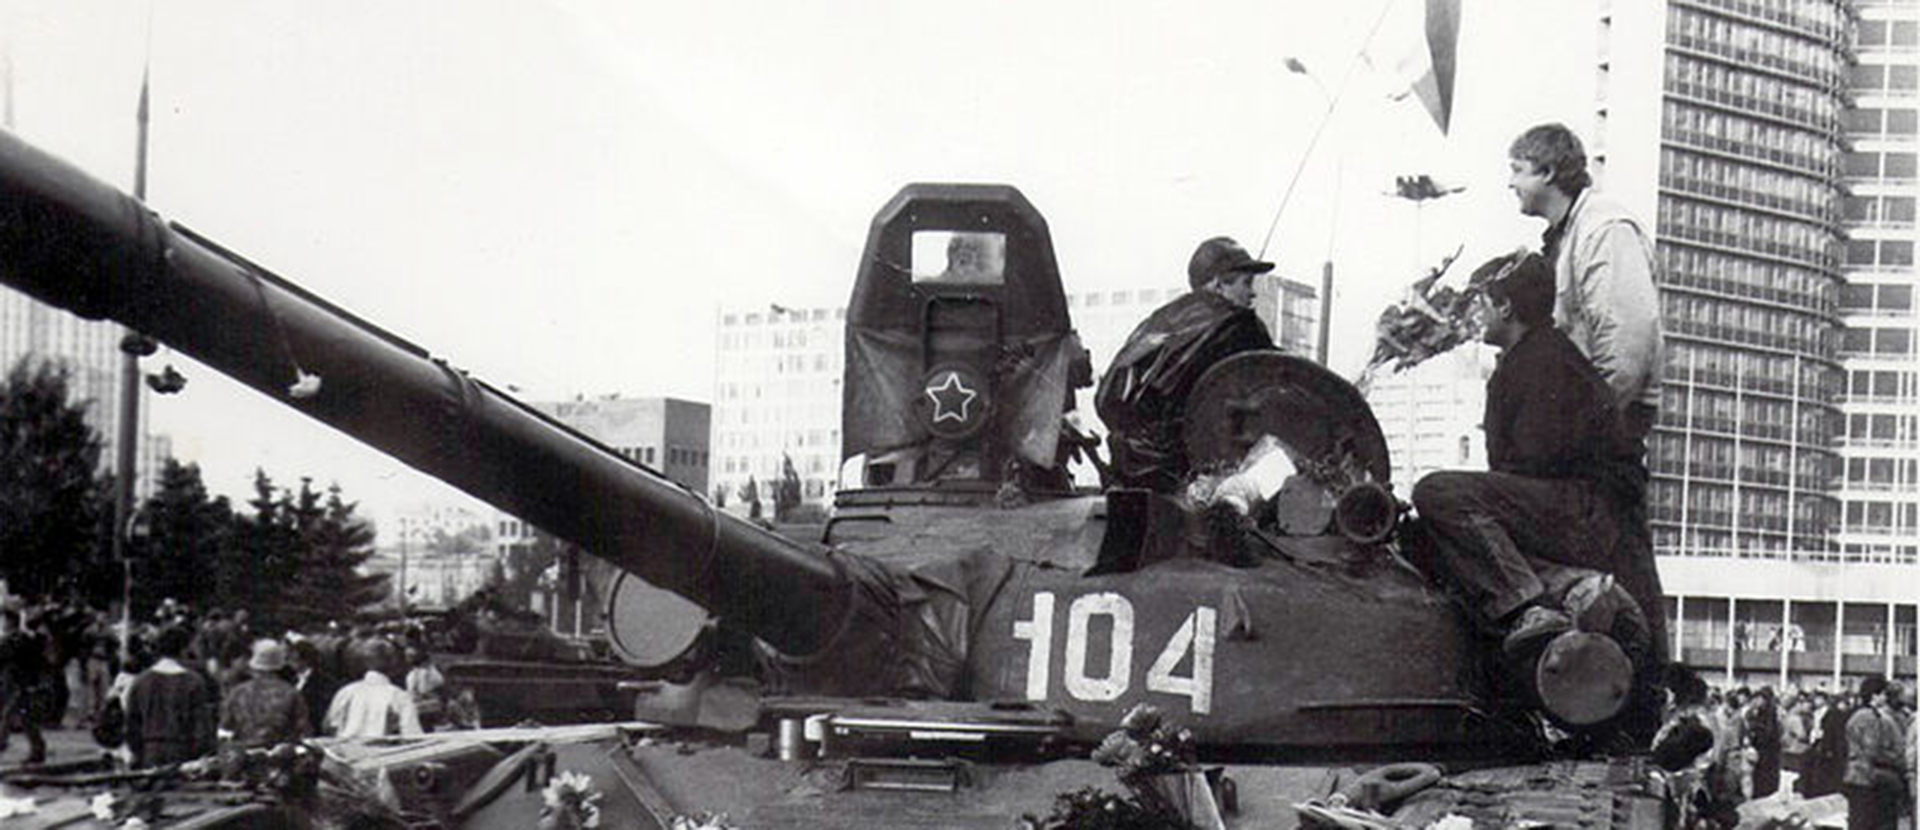 Soviet Union tank event header